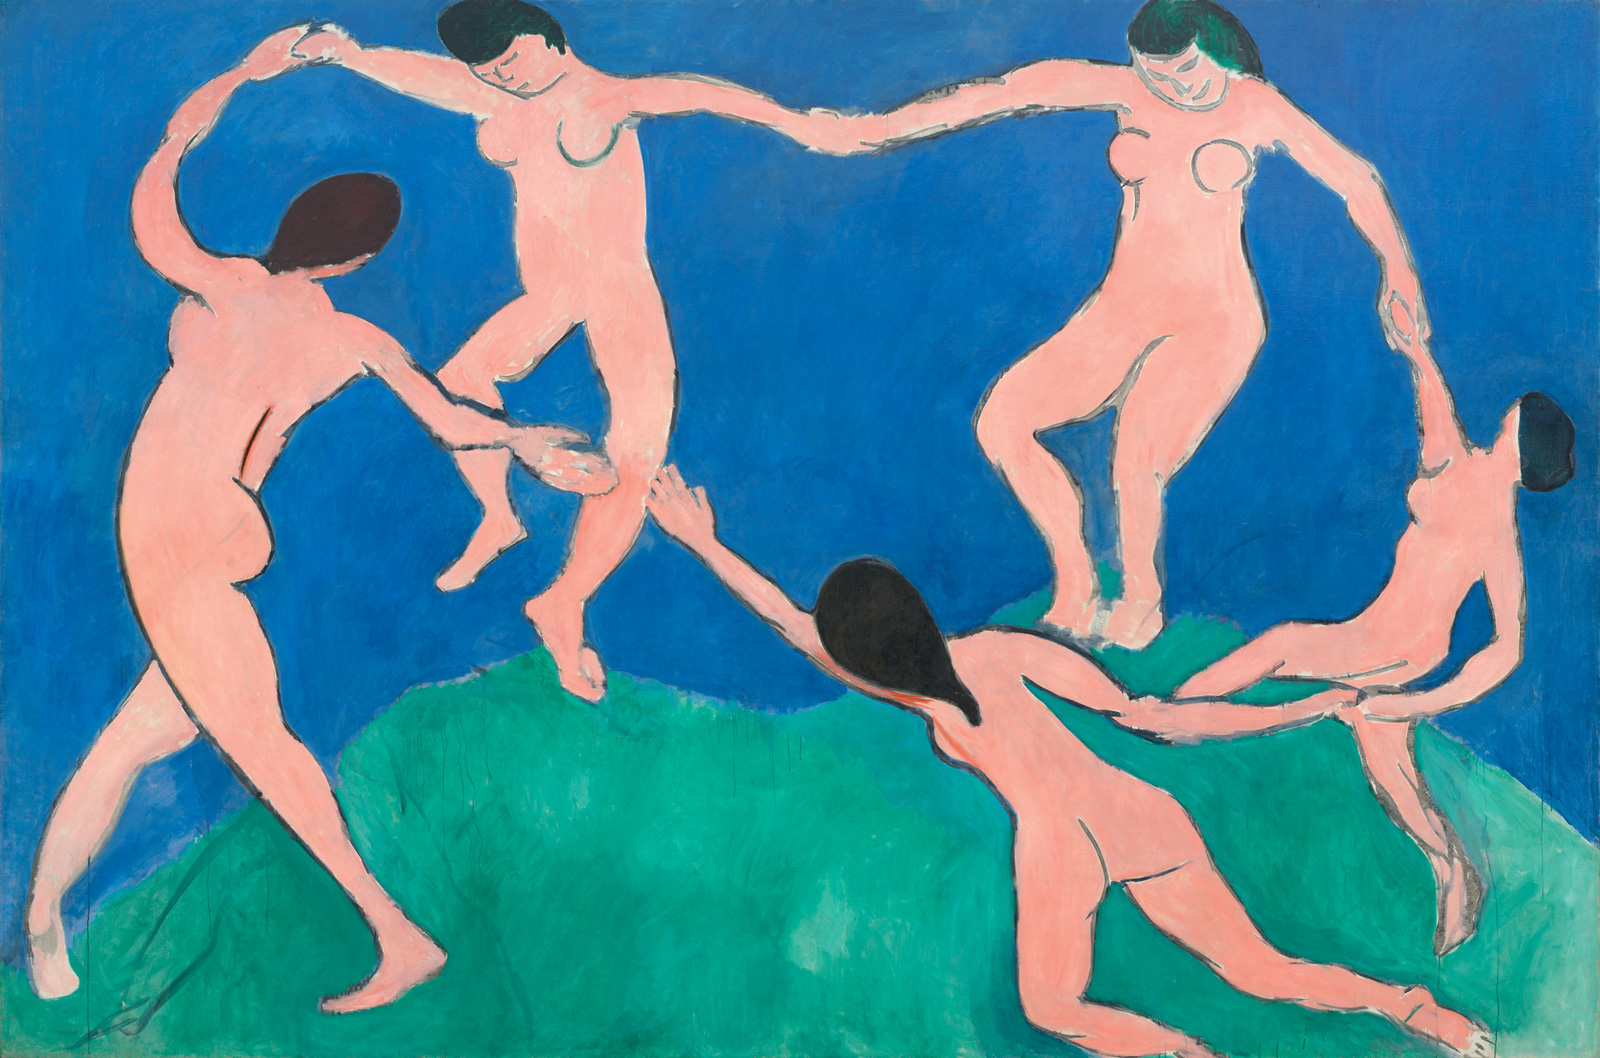   Henri Matisse, *La danza*, 1909. Museum of Modern Art 